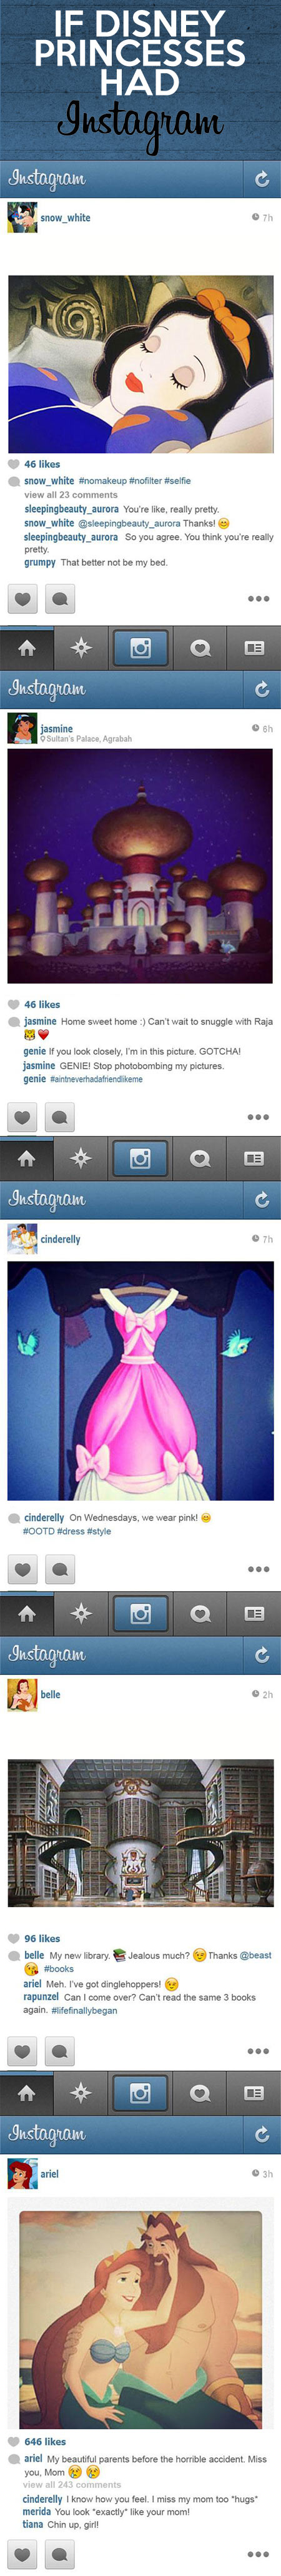 If Disney princesses had Instagram.